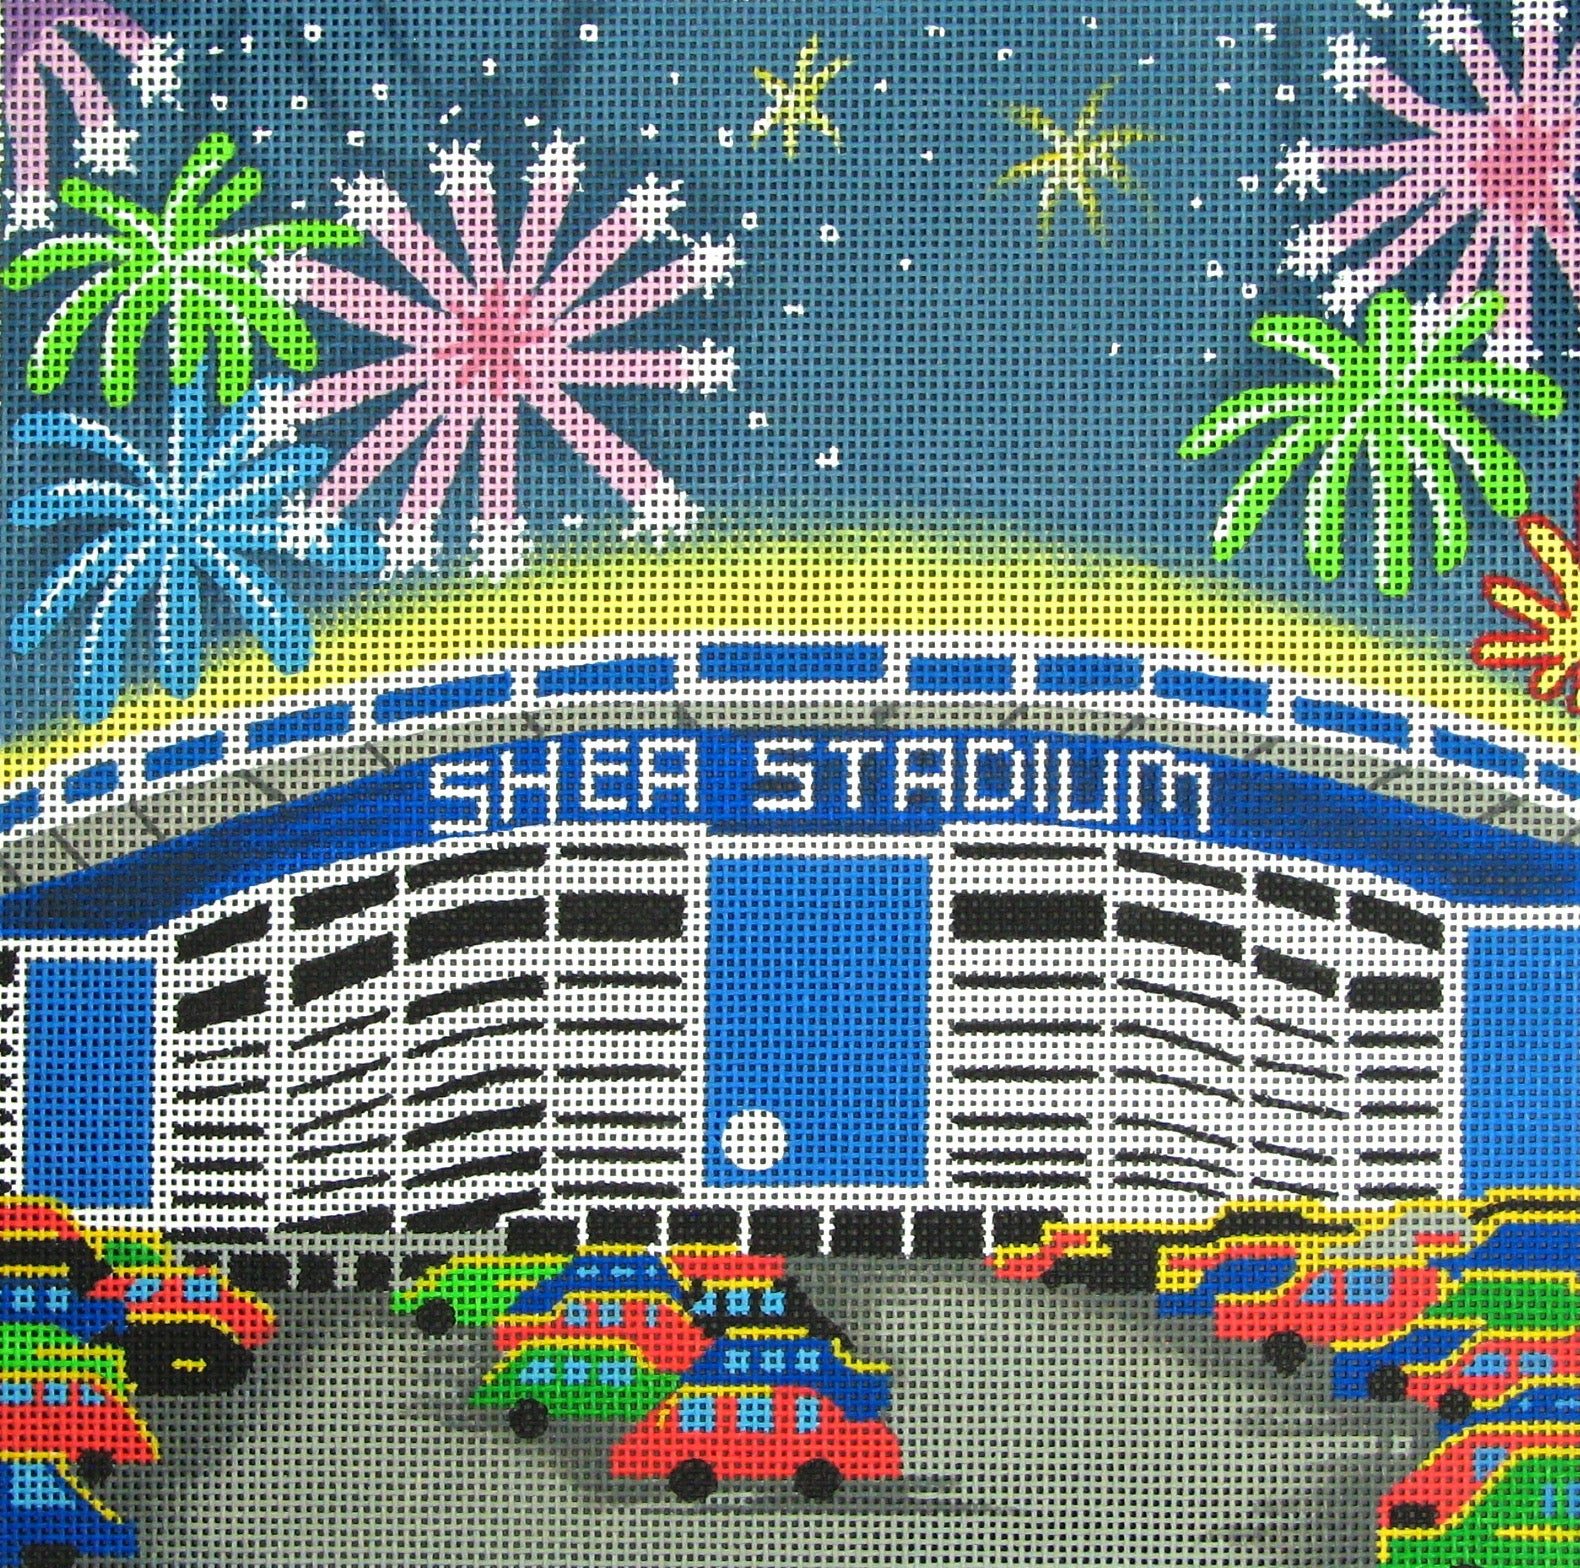 Amanda Lawford needlepoint canvas of the Shea Stadium baseball stadium home of the New York Mets MLB team